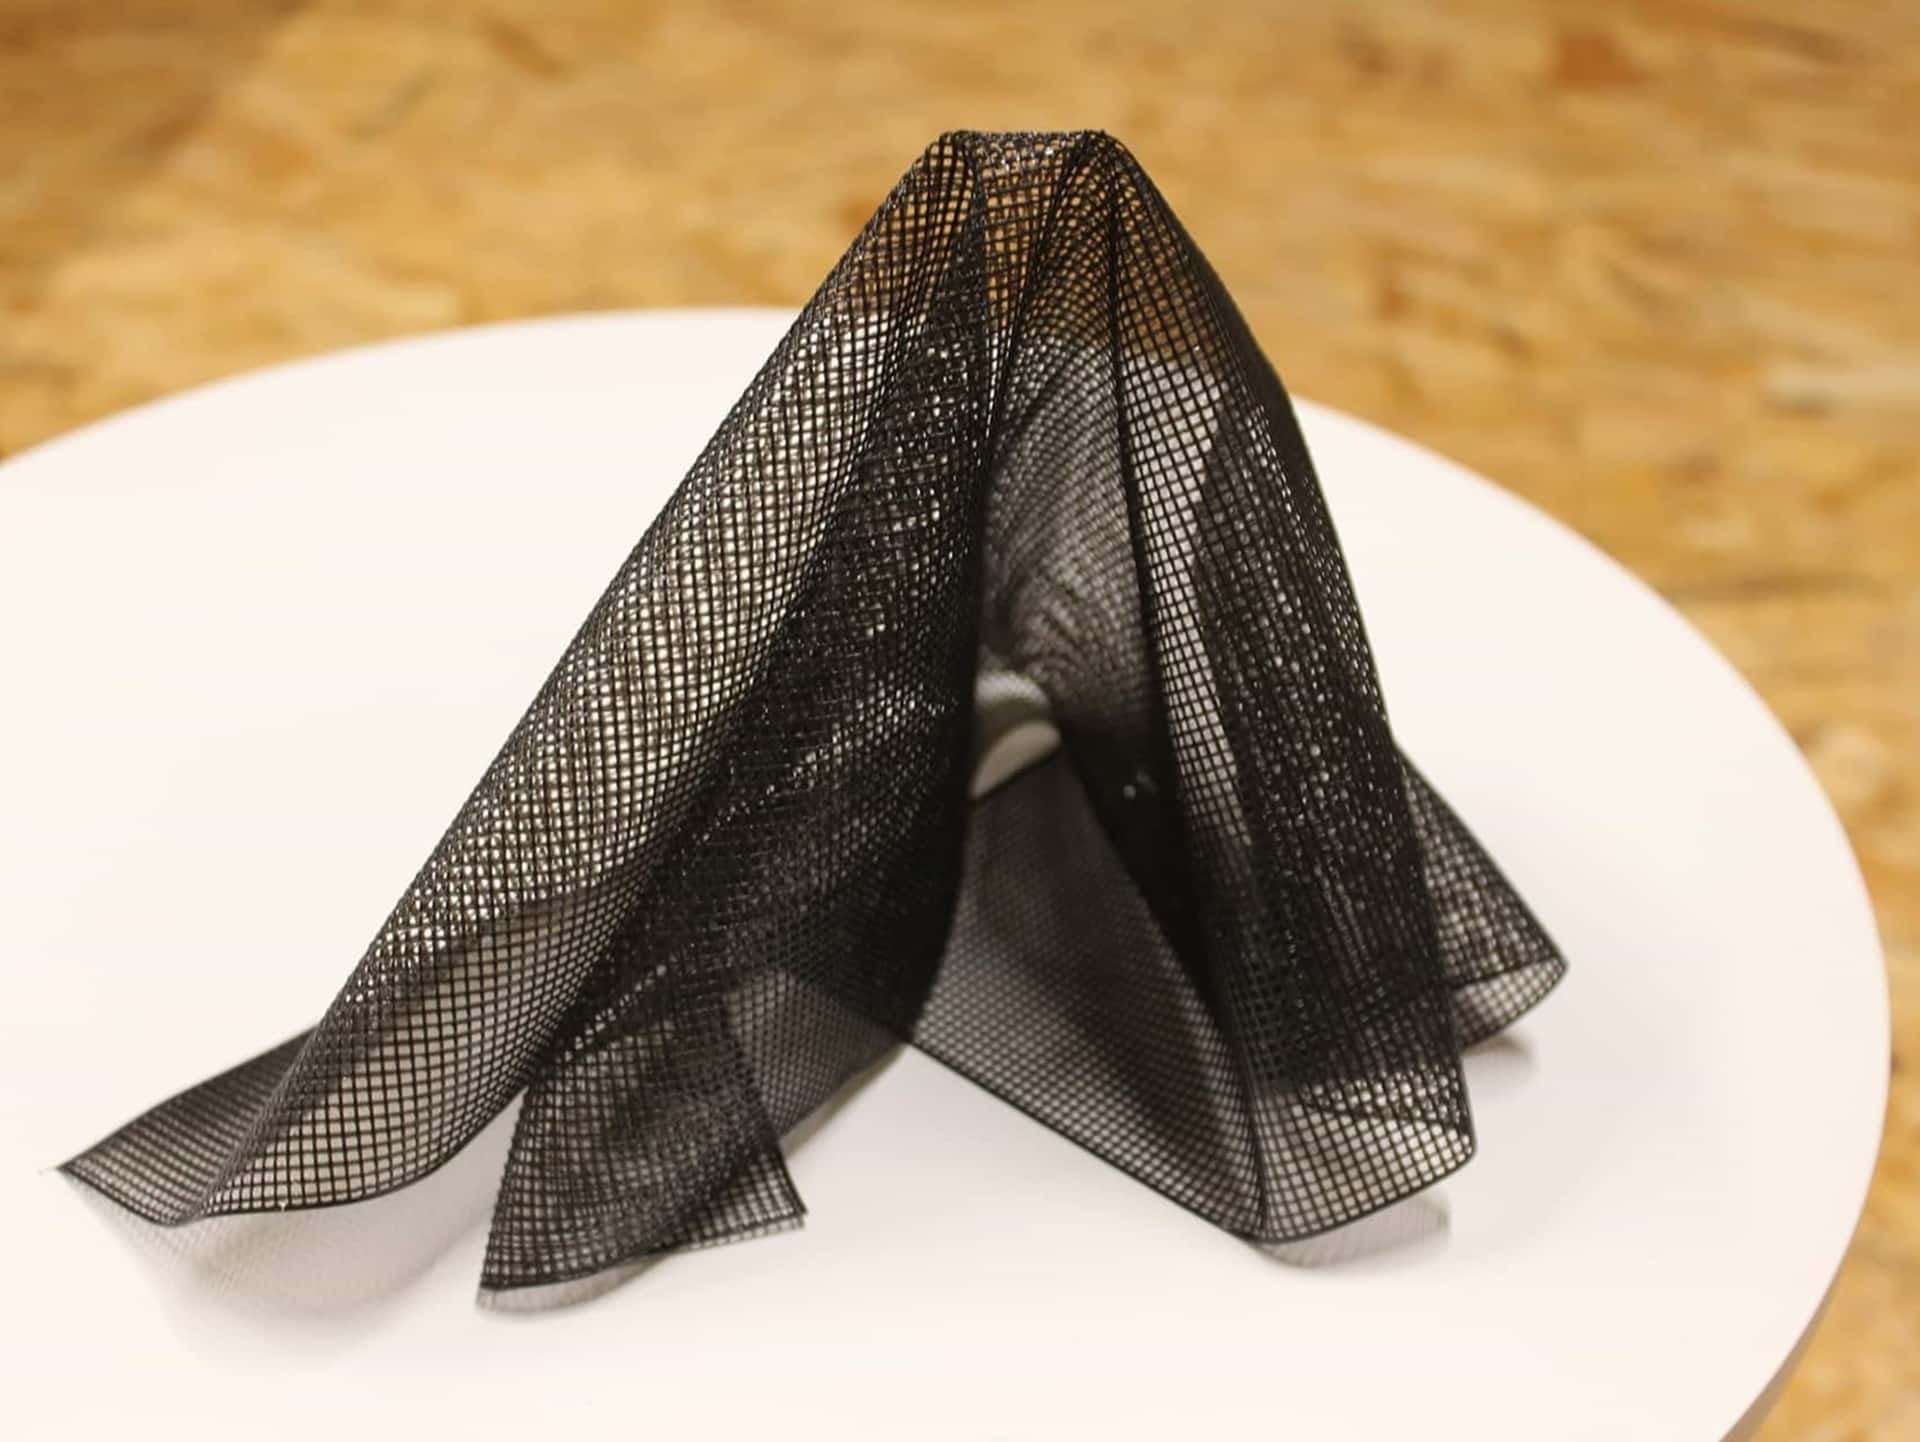 3D printed textile